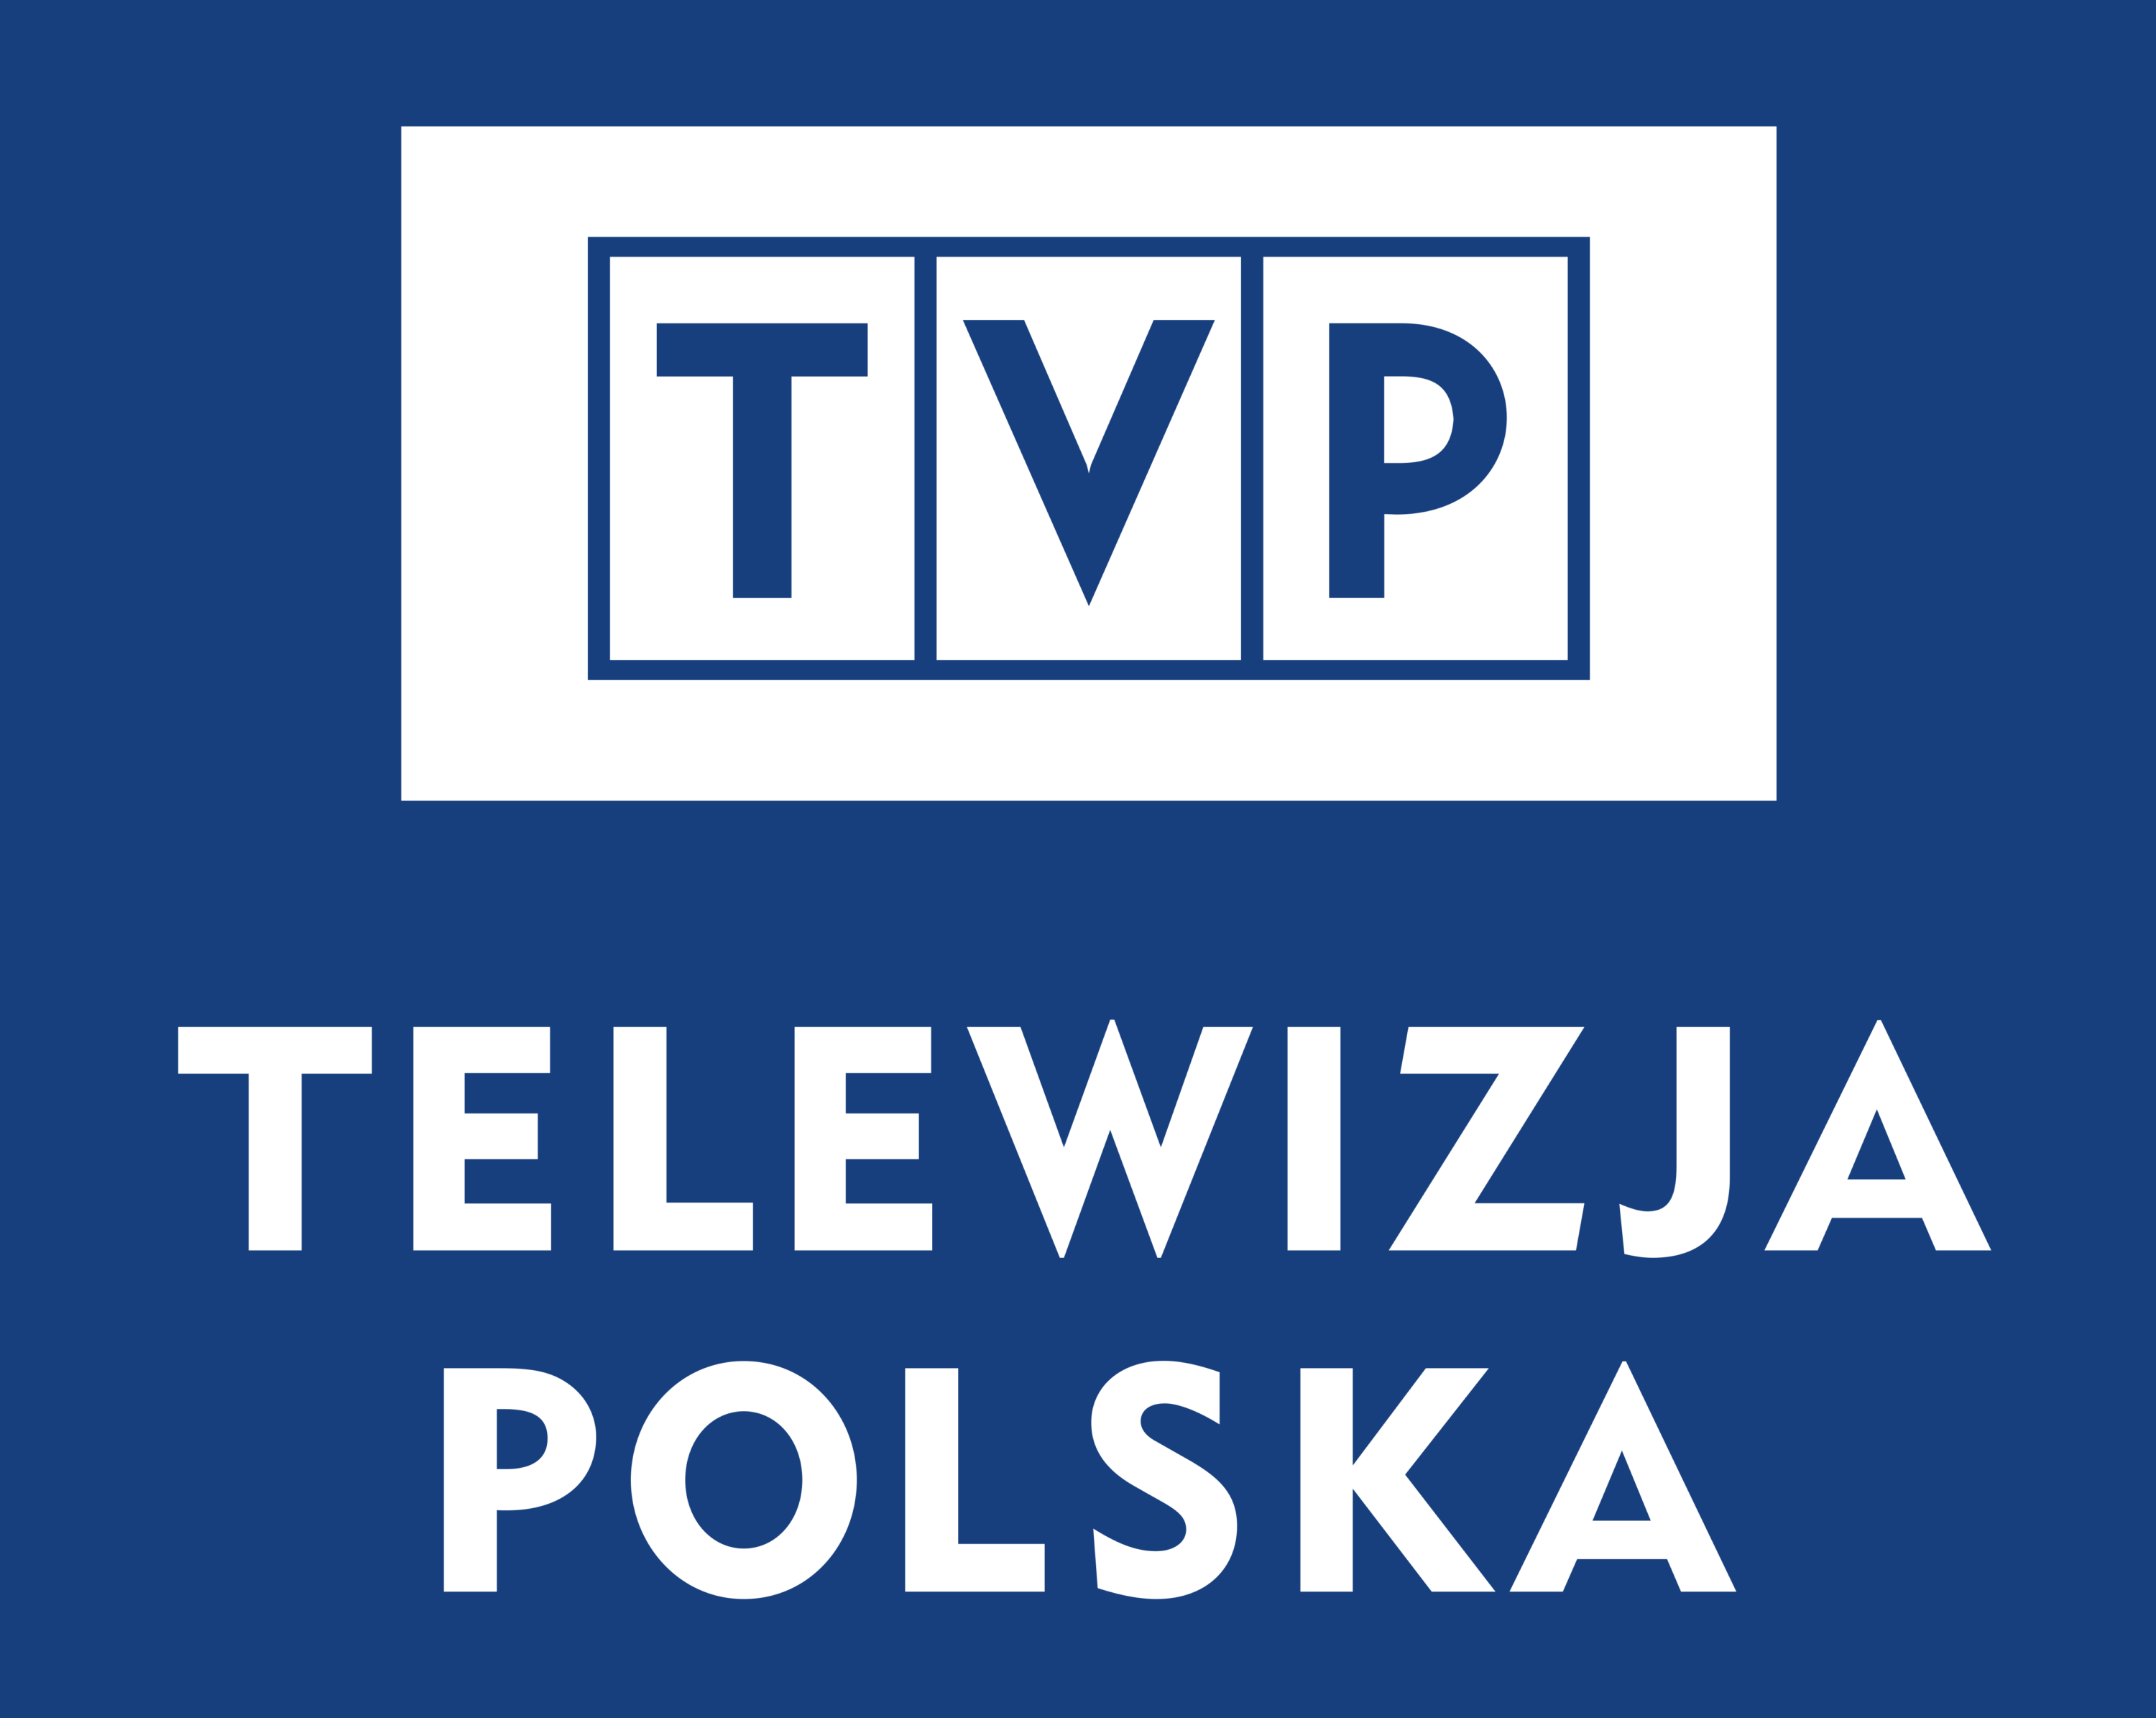 Telewizja Polska white variant Logo 2003